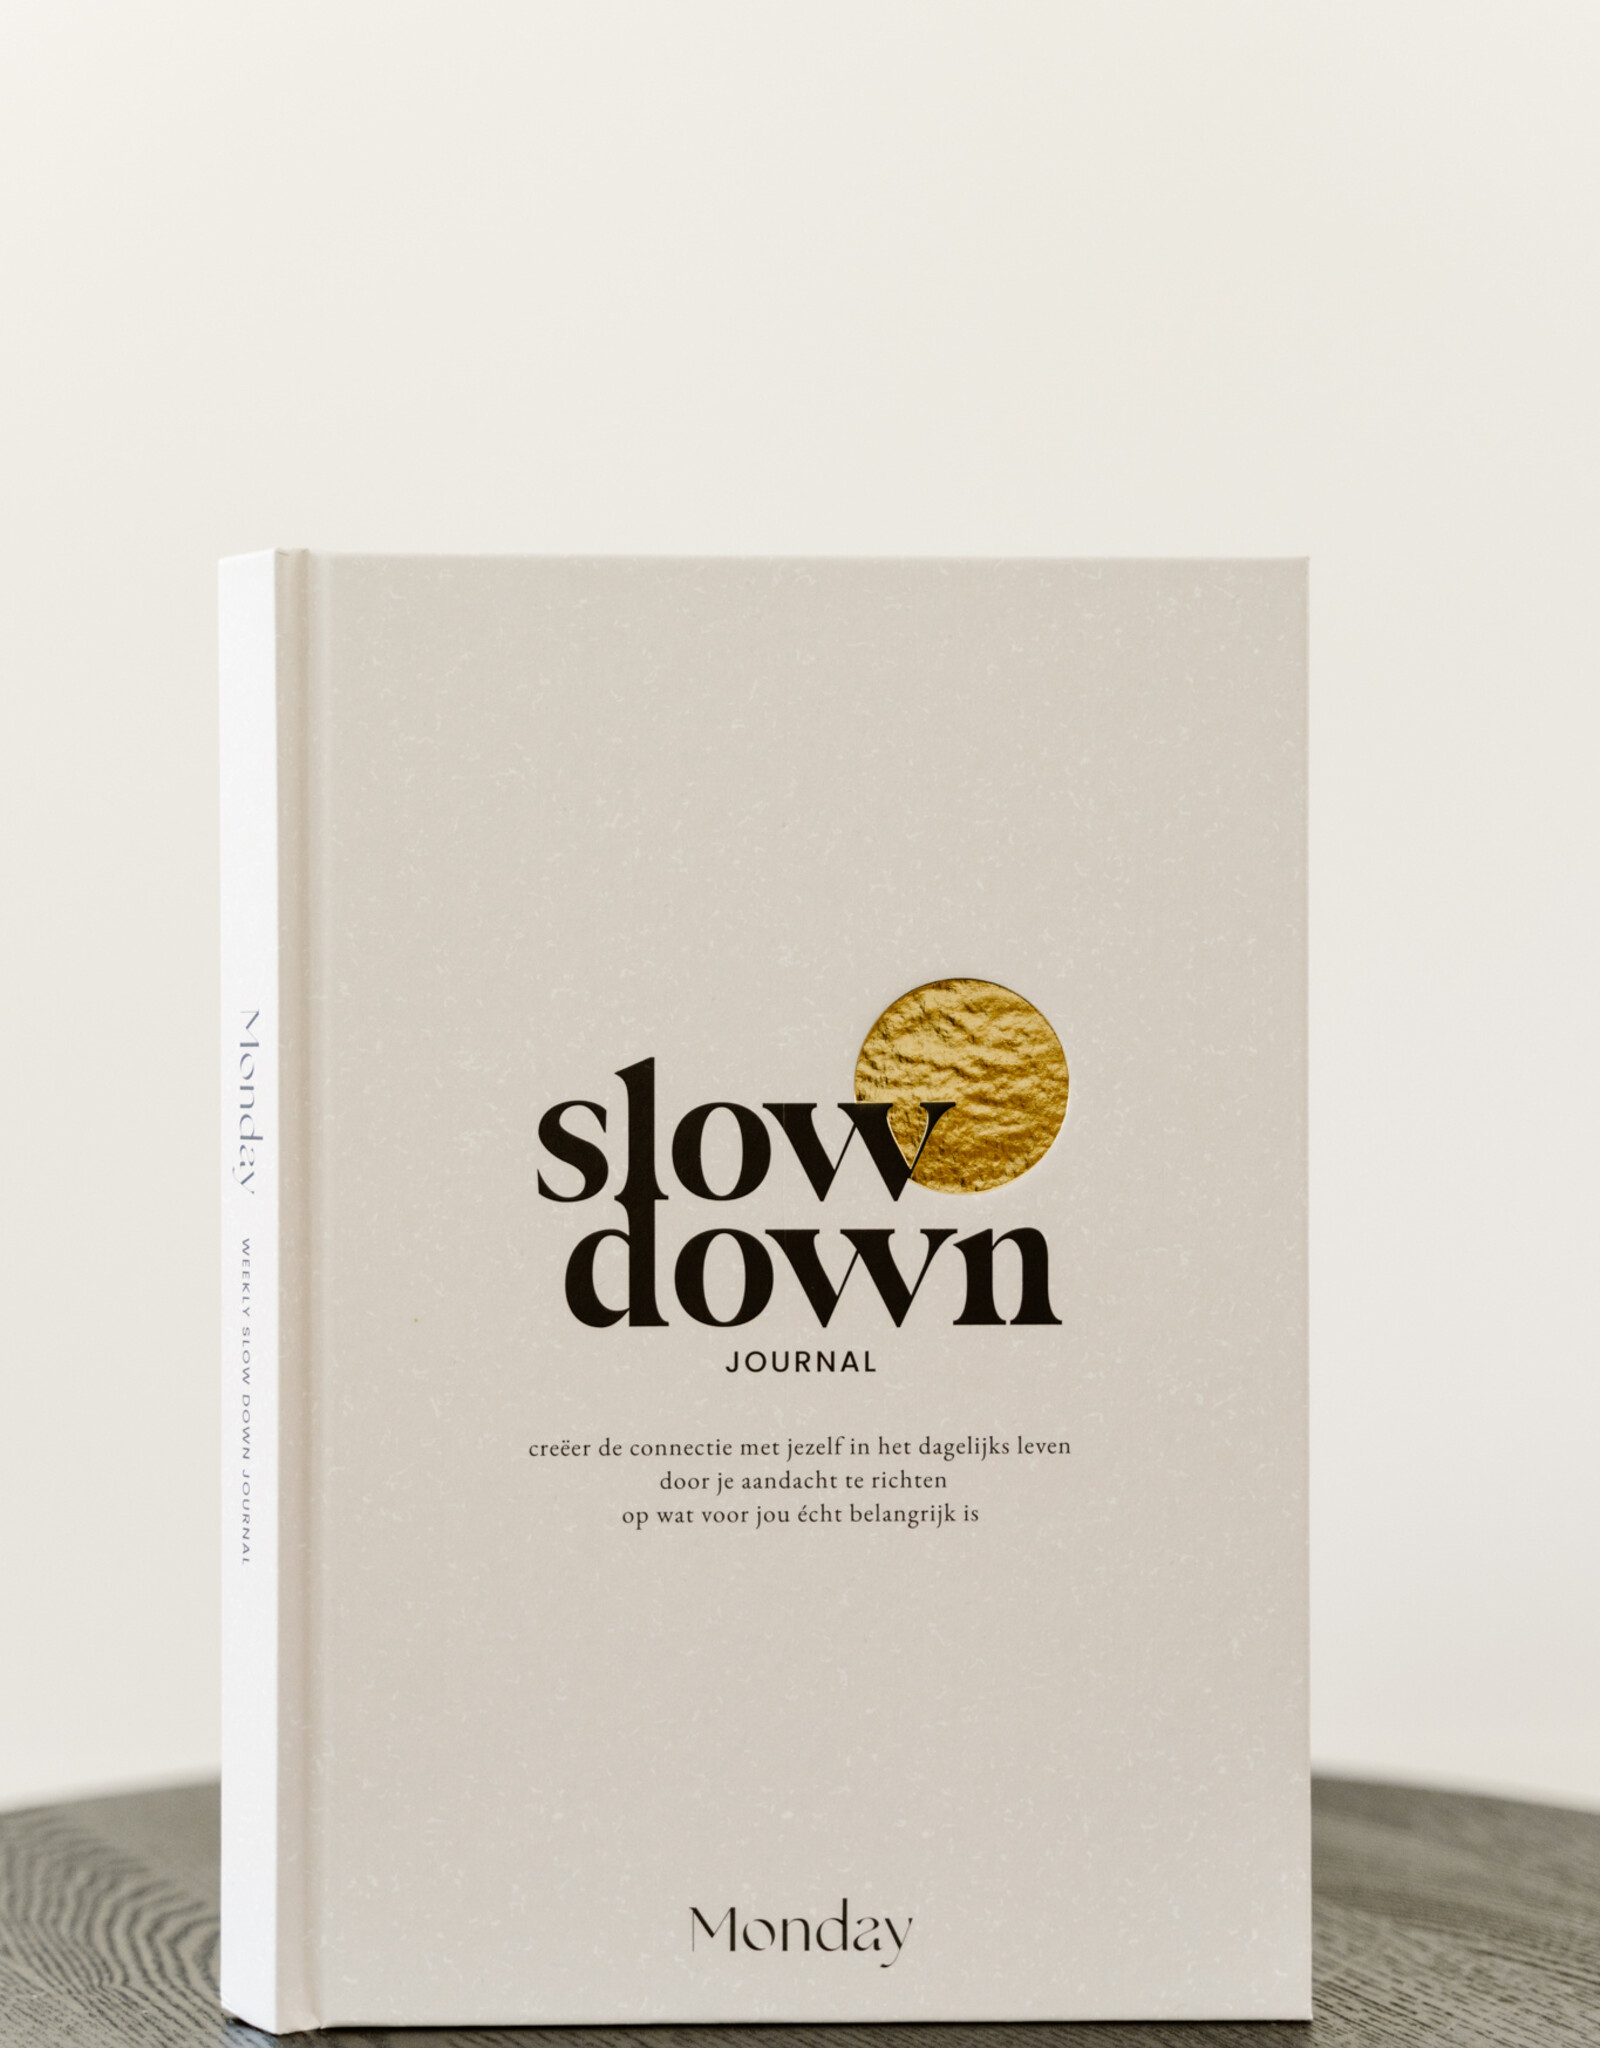 Monday 'Slow Down' journal